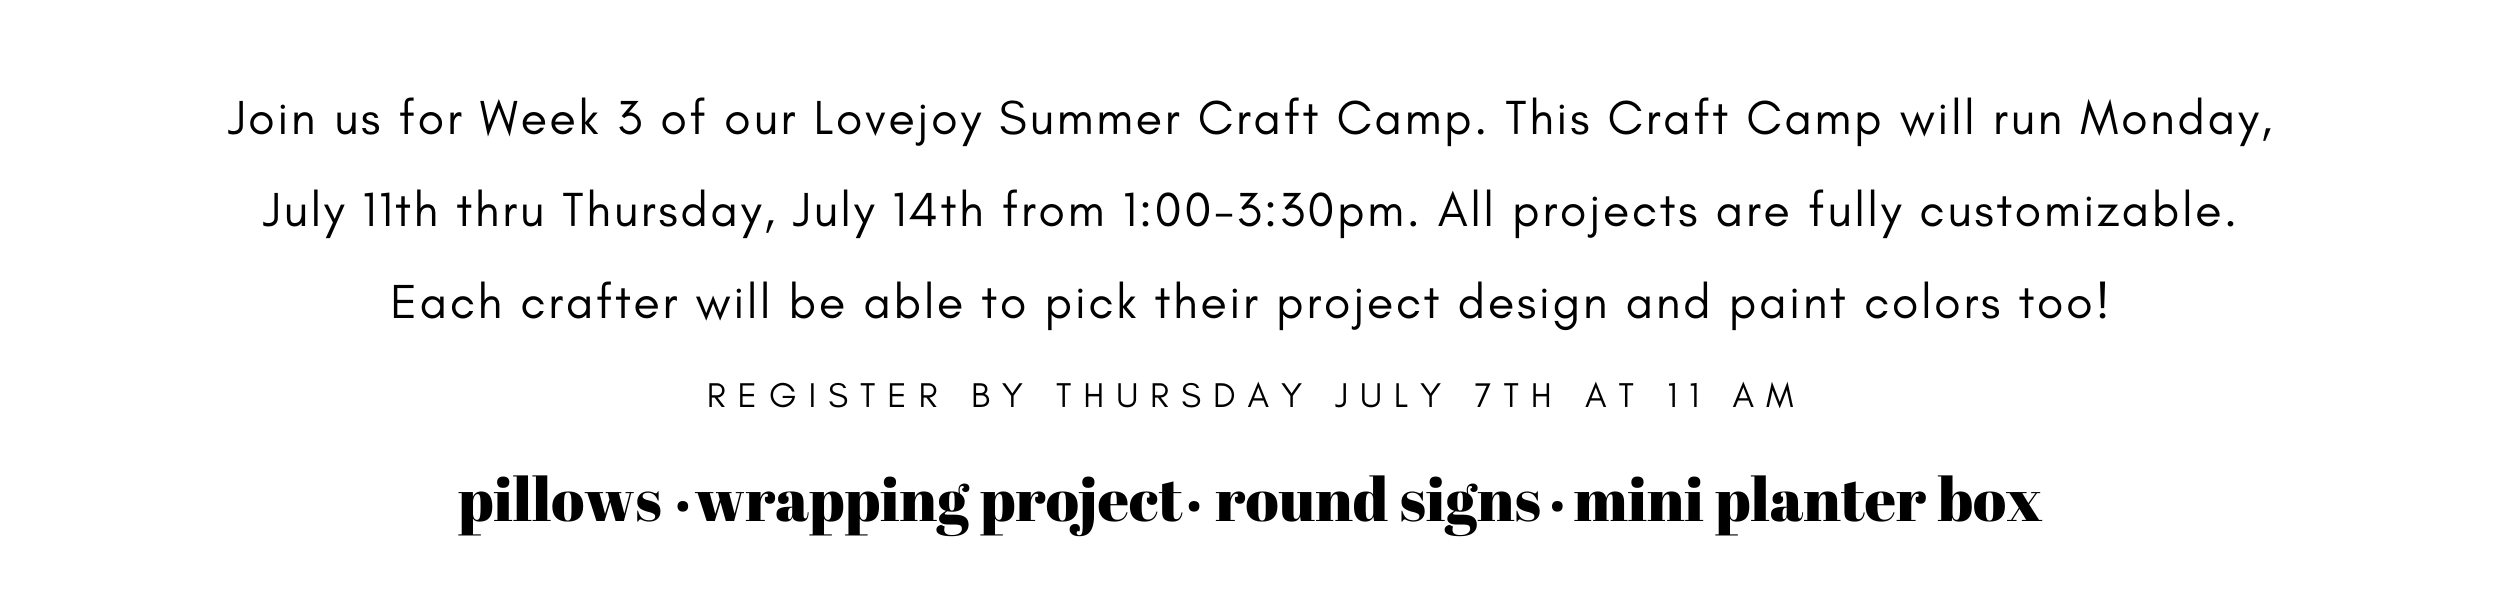 Summer Craft Camp Week 3 | Lovejoy Workshop | Hillsboro, Oregon | www.lovejoyworkshop.com